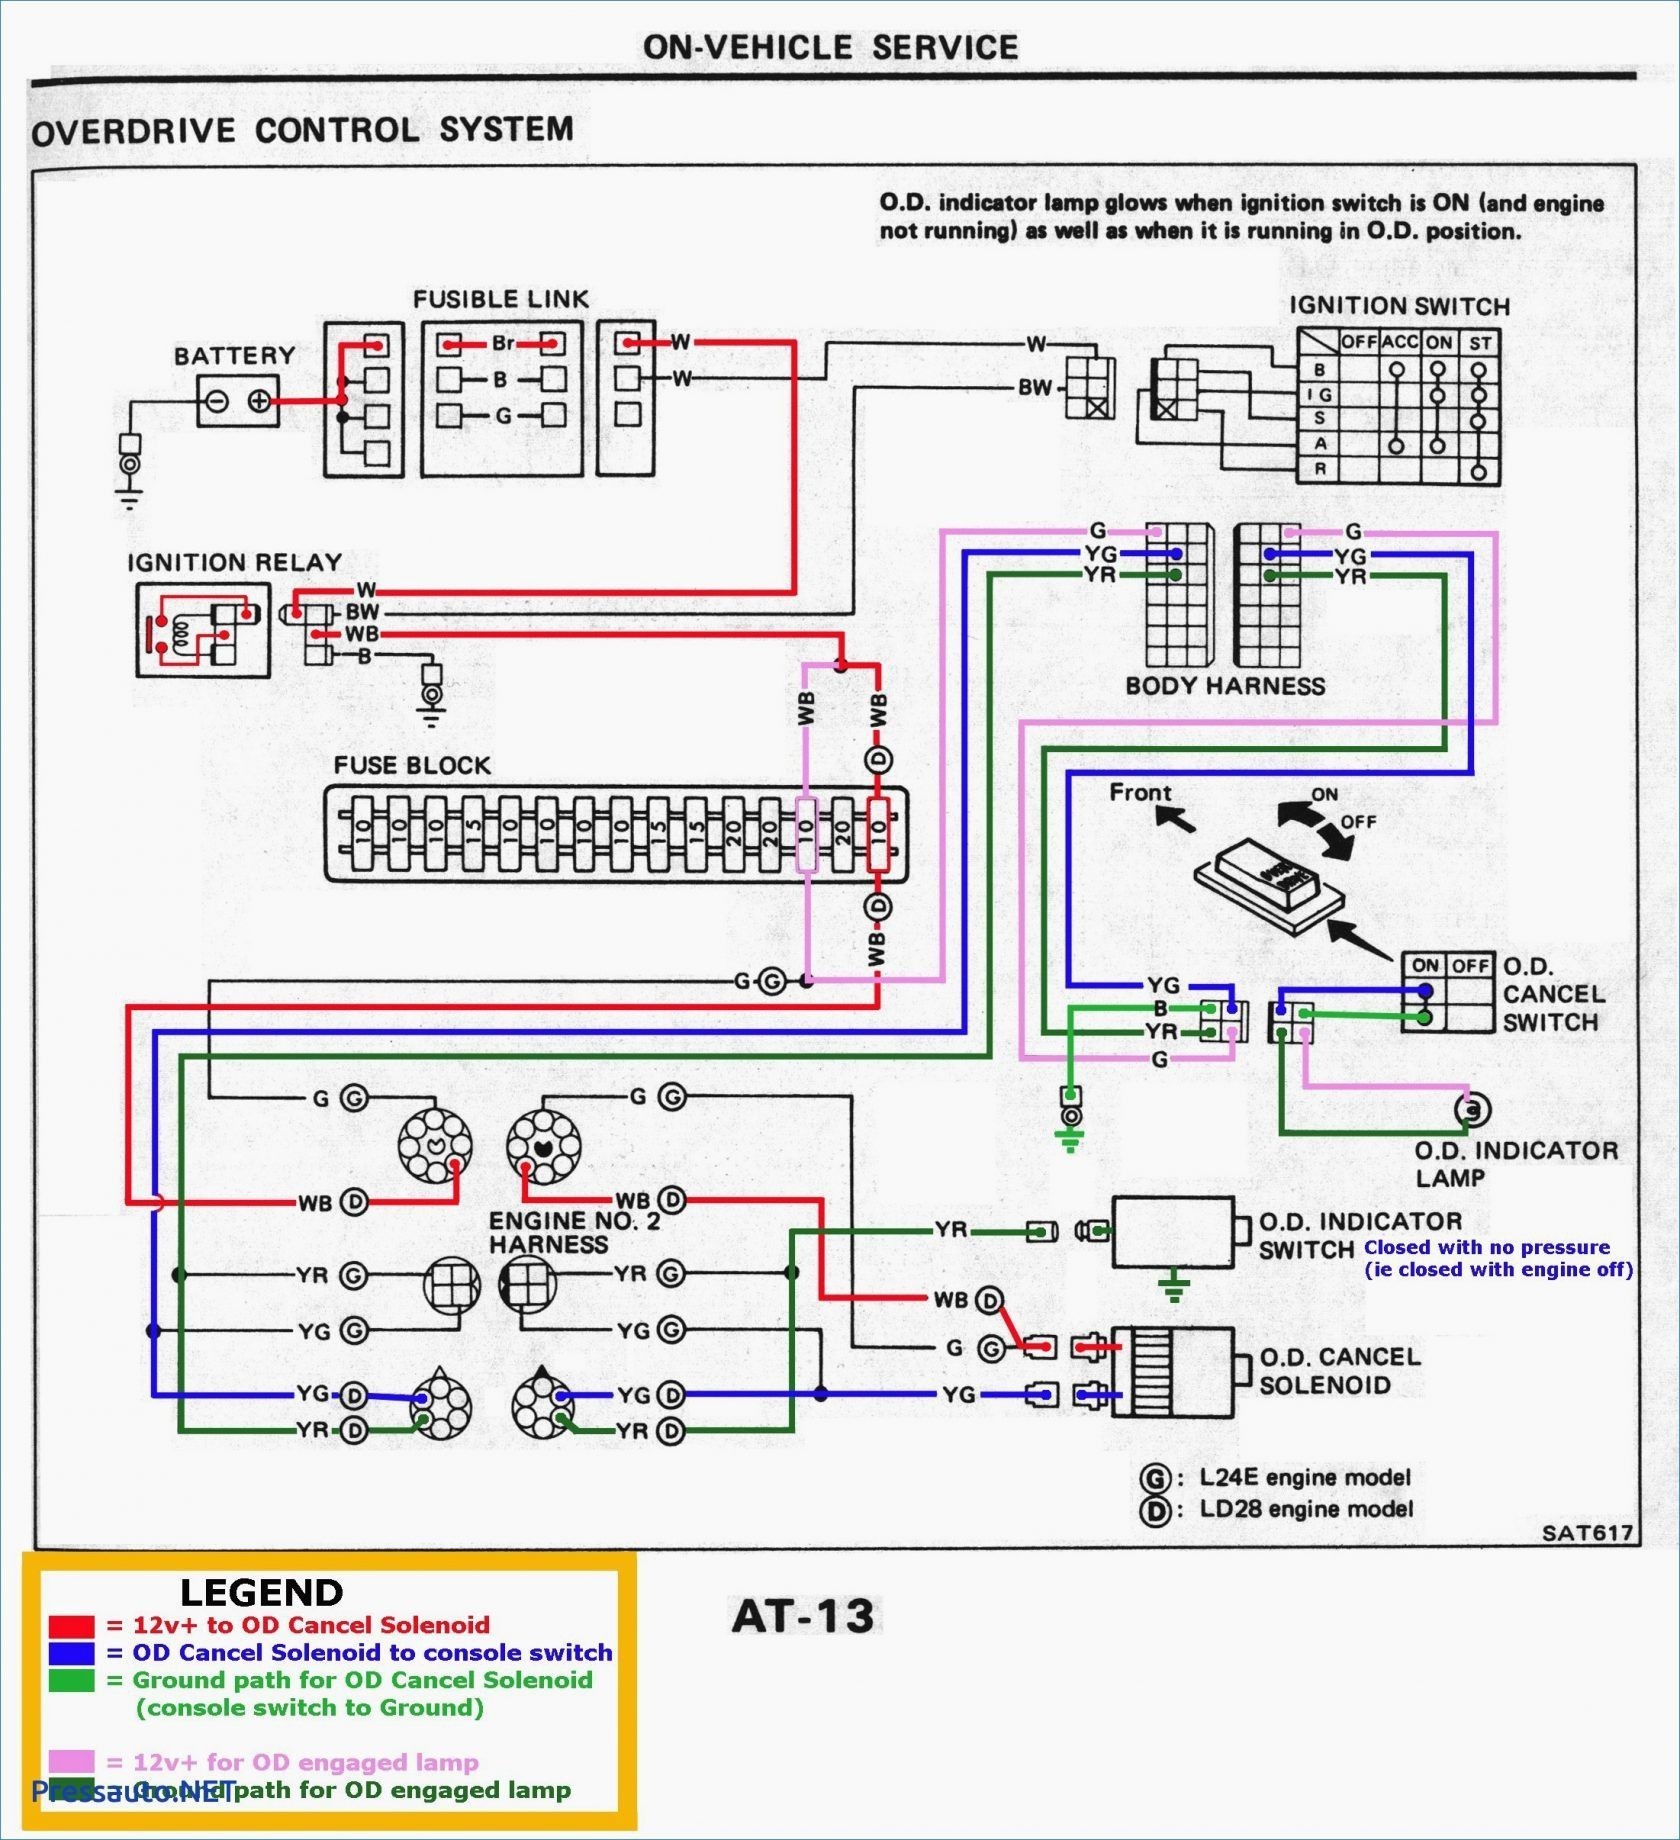 Diagram Of Brake System Bmw X5 E53 Parts Diagram Wiring Diagram Inside Of Diagram Of Brake System